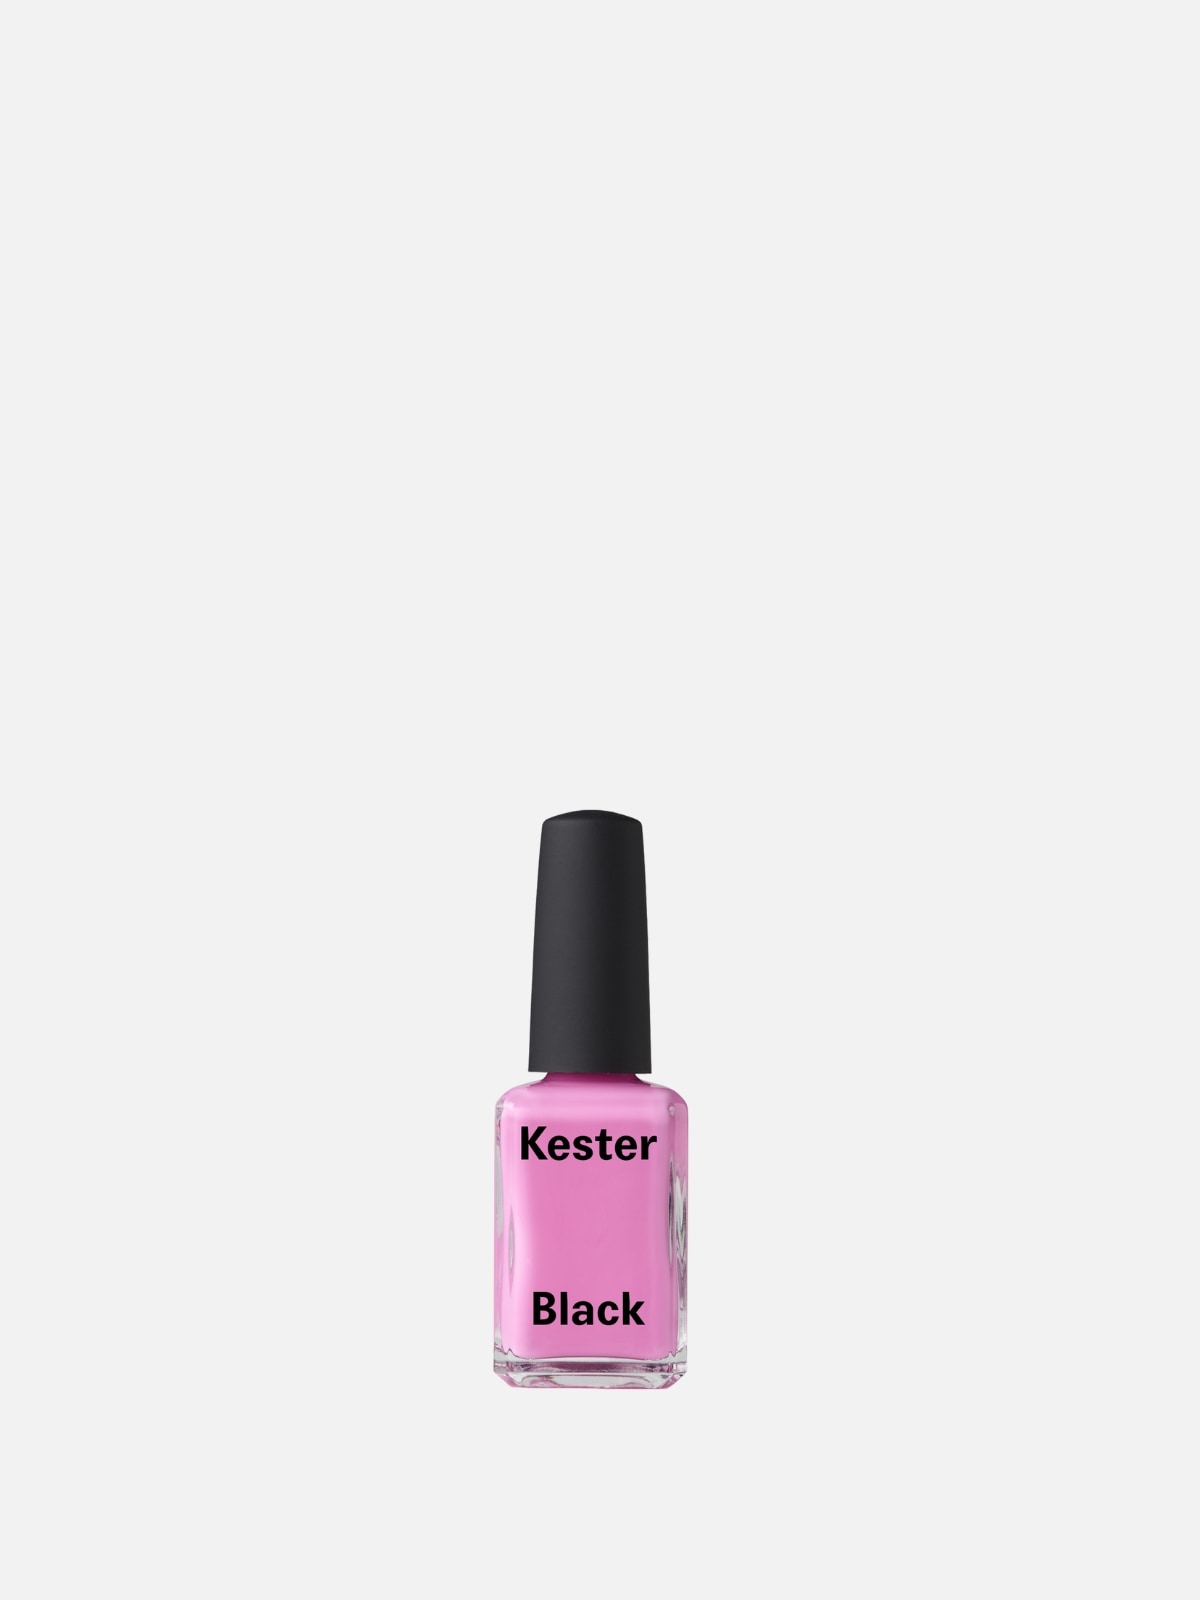 Kester Black - Arm Candy - Smalto color rosa schiaparelli